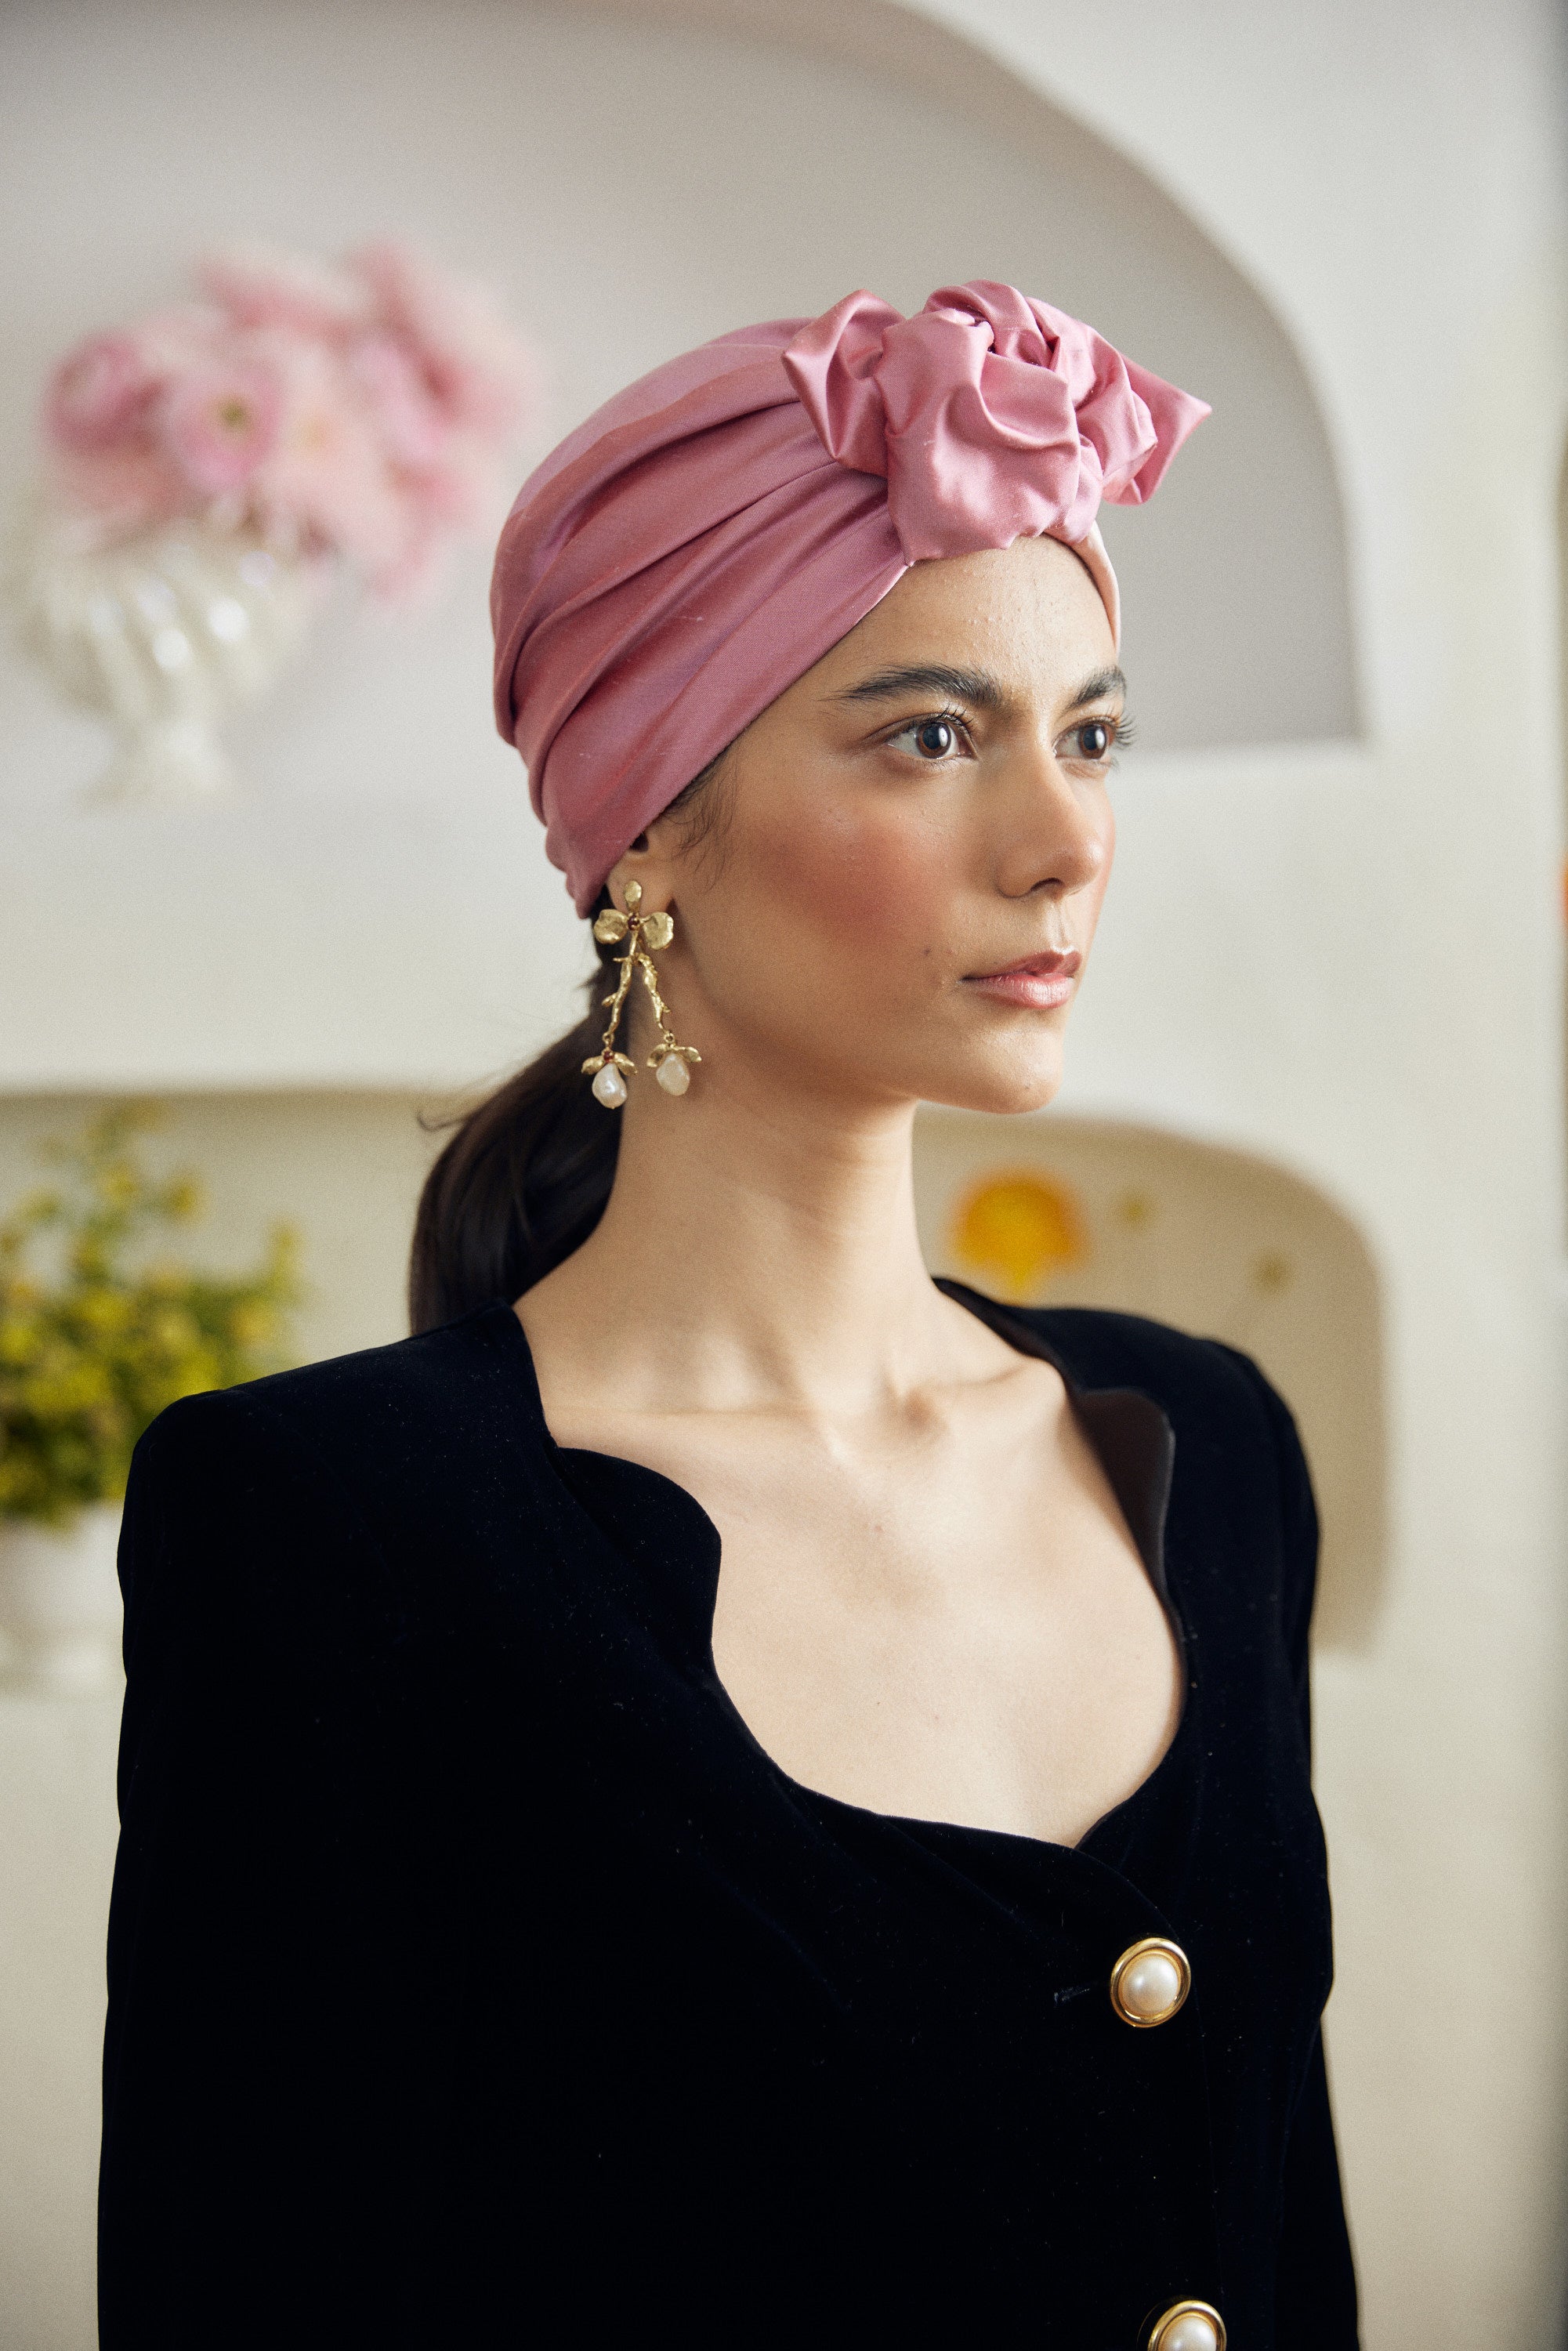 Parelli knotted turban hat - Pink shantung silk